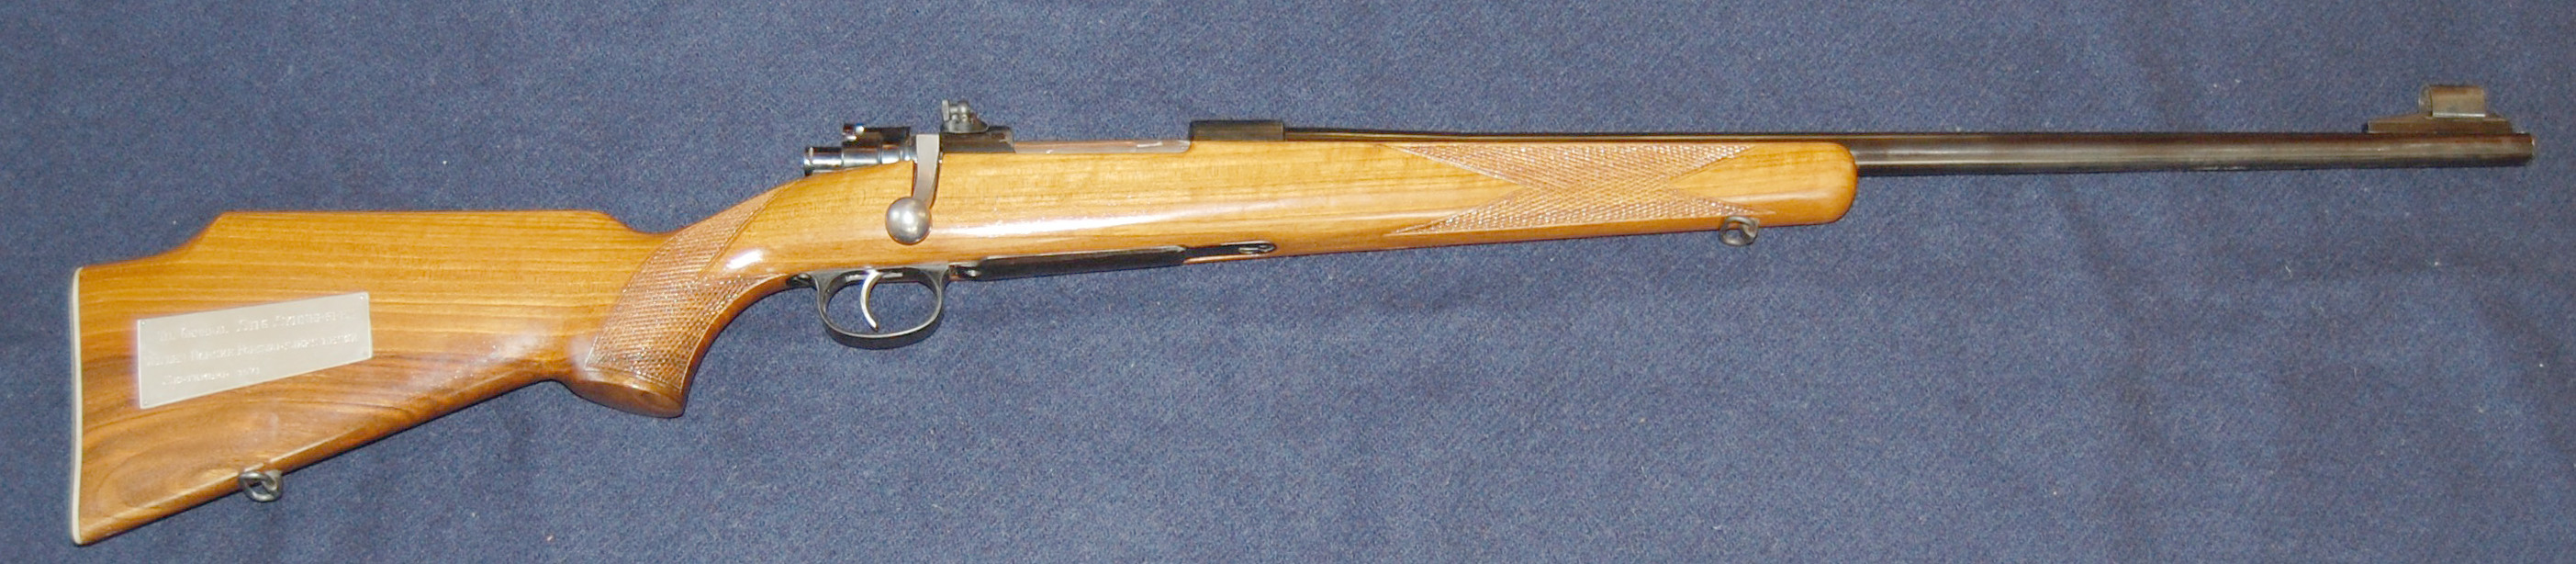 ./guns/rifle/bilder/Rifle-Kongsberg-Mauser-M62-1.jpg